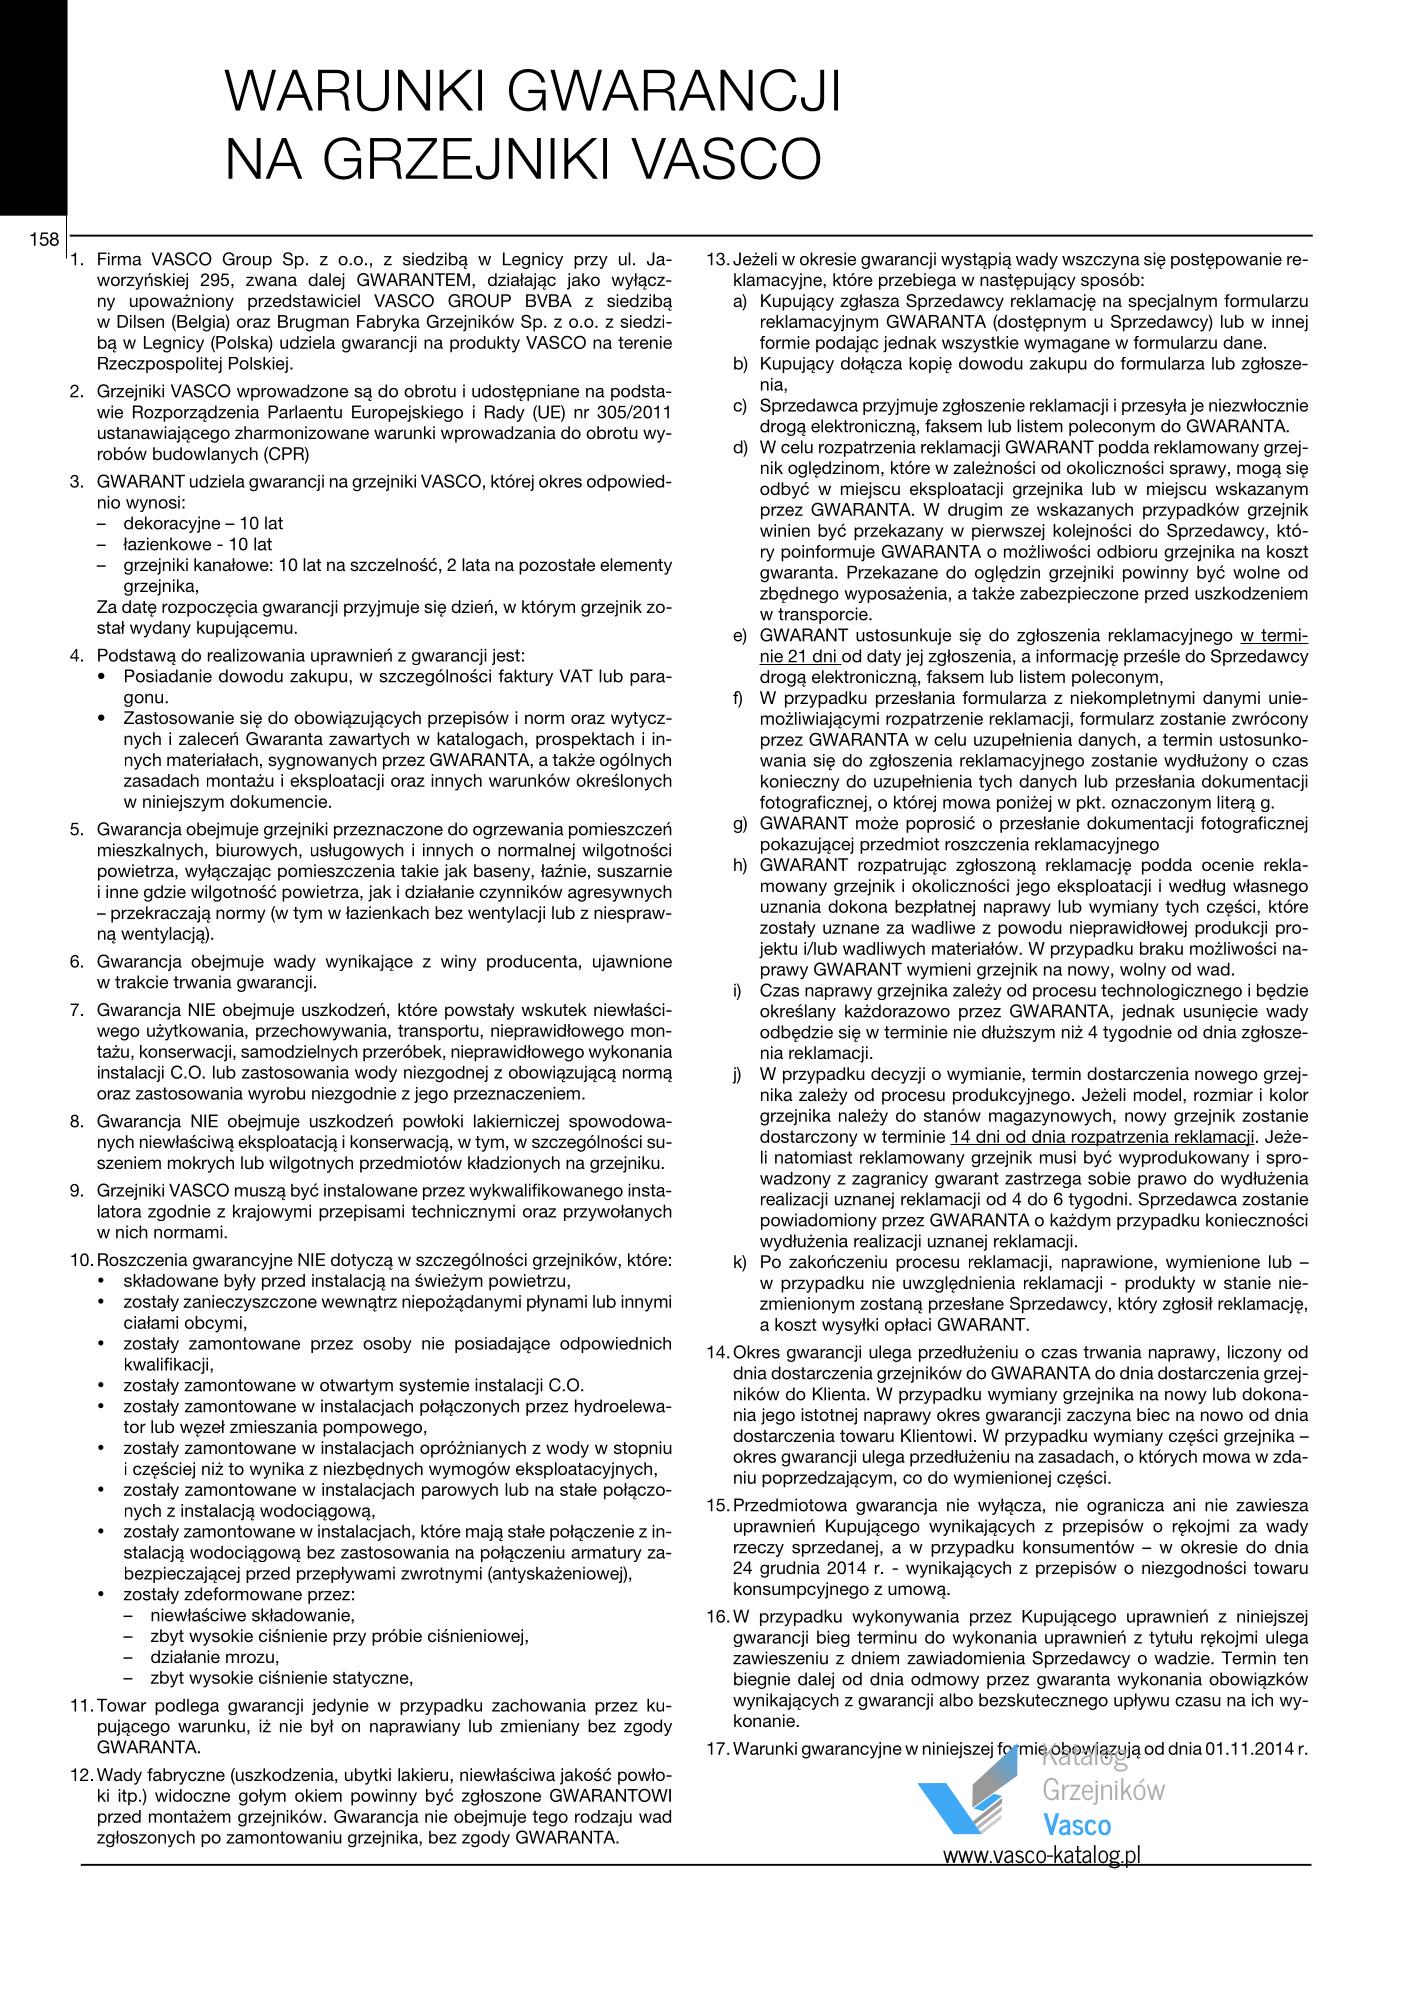 Katalog Vasco 2021 - Warunki gwarancji na grzejniki Vasco